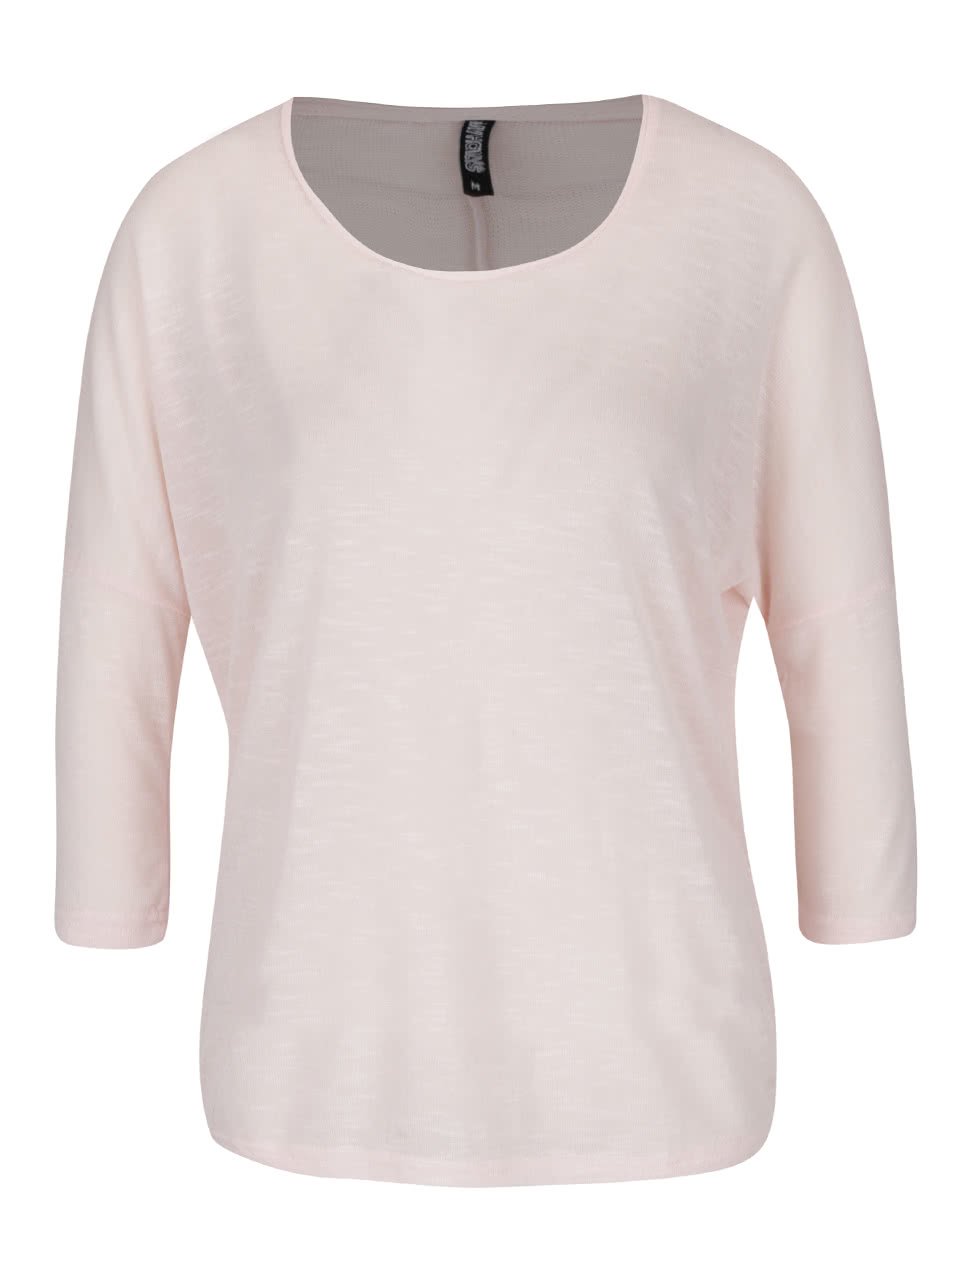 Růžový lehký svetr s 3/4 rukávy Haily´s Laureen